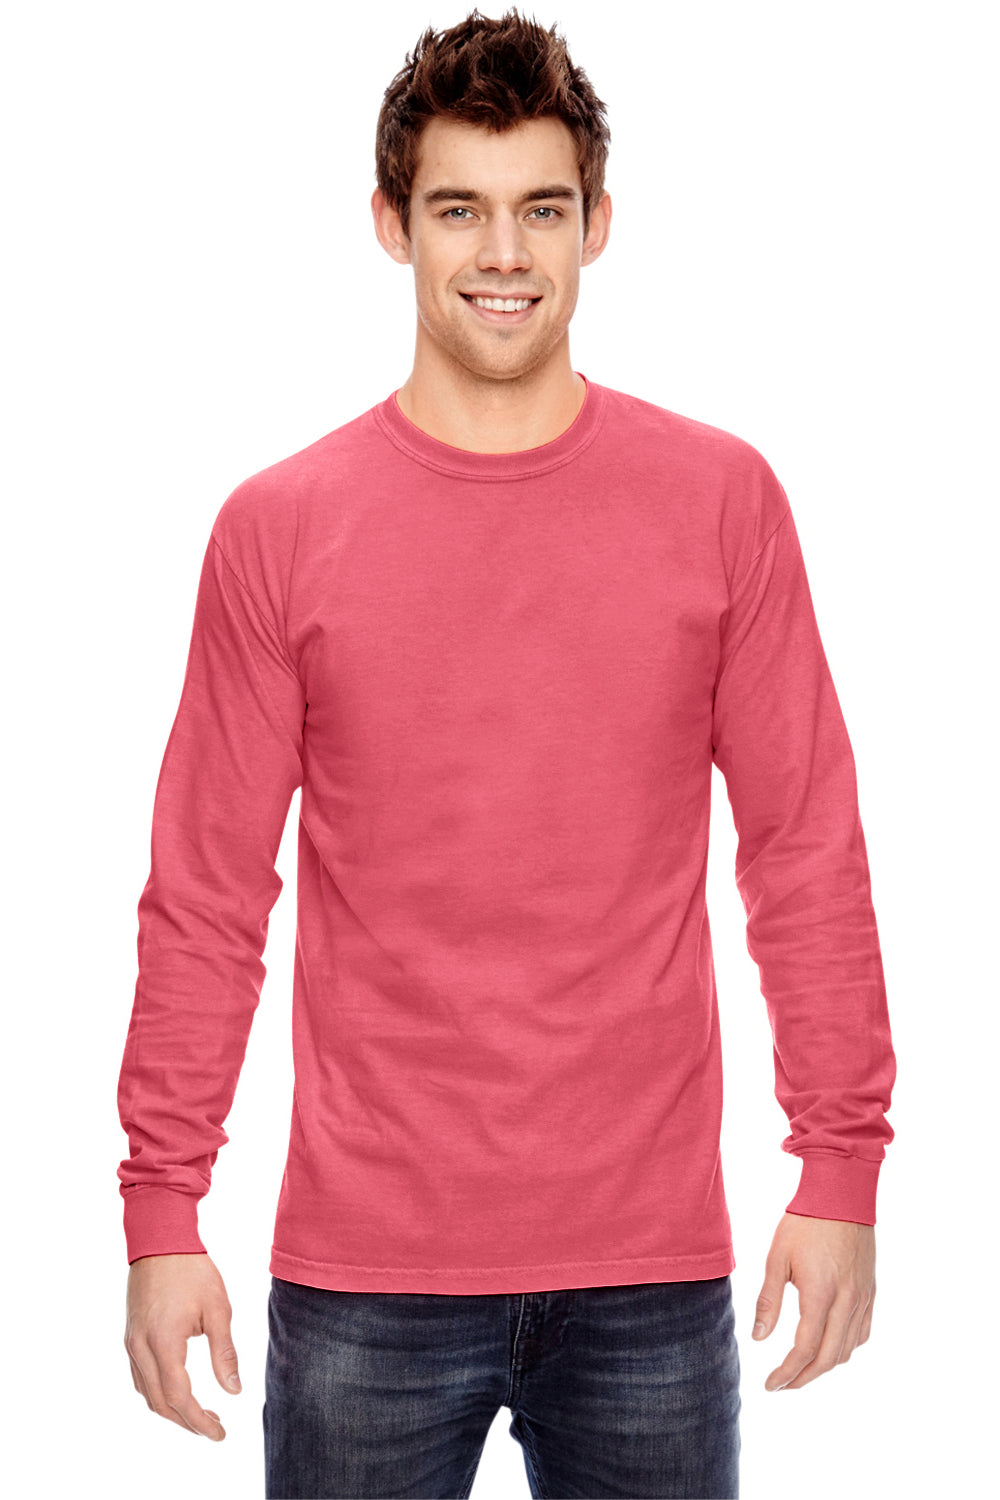 Comfort Colors C6014 Mens Long Sleeve Crewneck T-Shirt Watermelon Pink Front